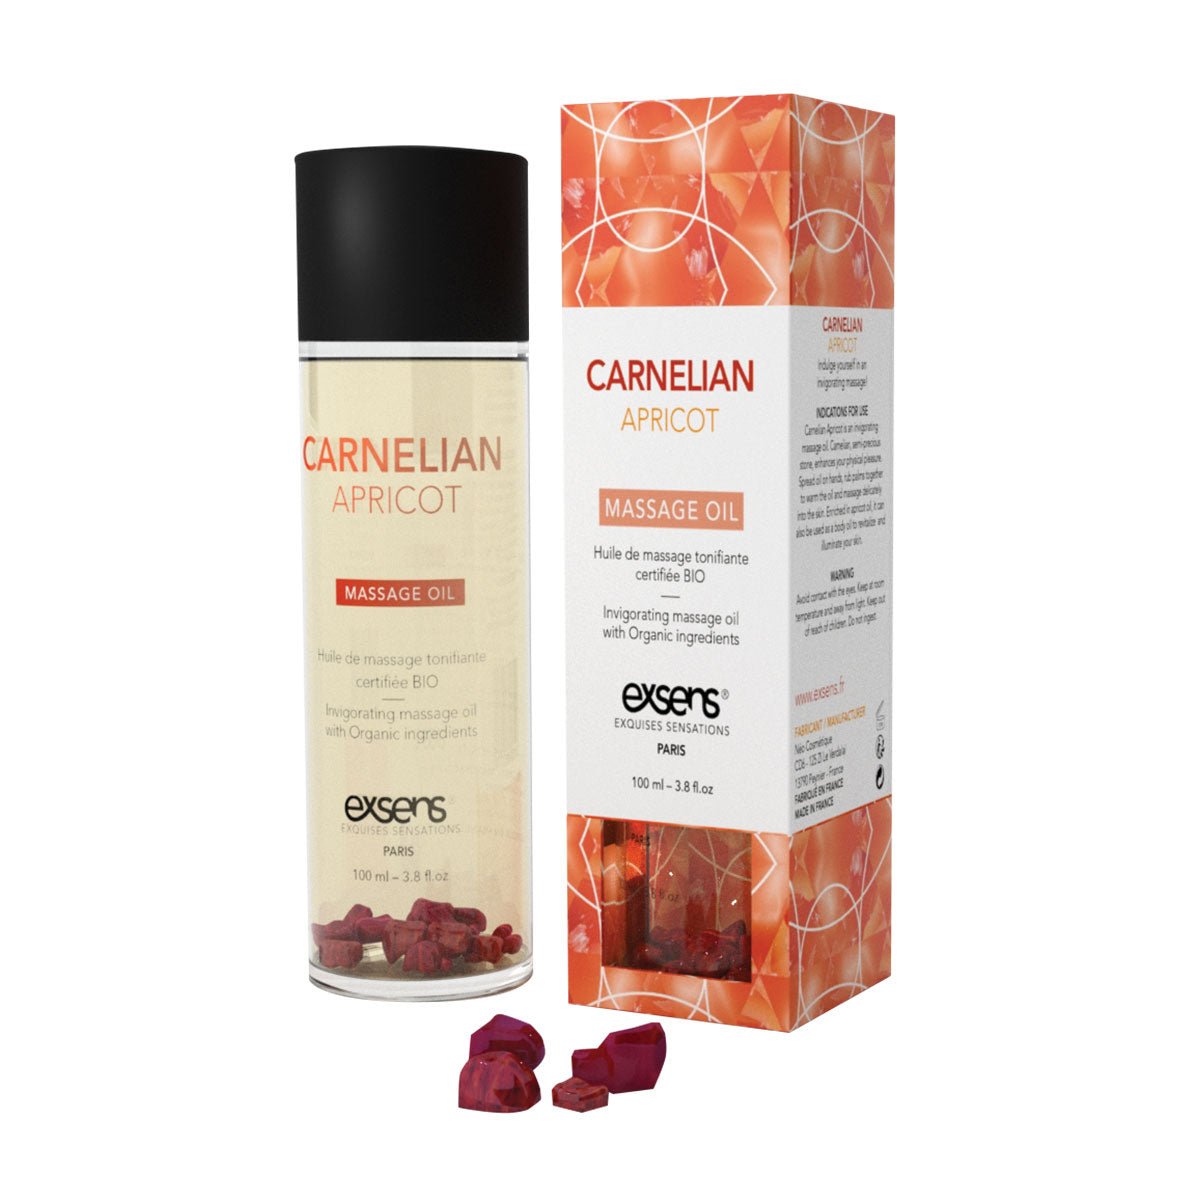 Exsens Massage Oil 100ml - Carnelian Apricot Massage Oil